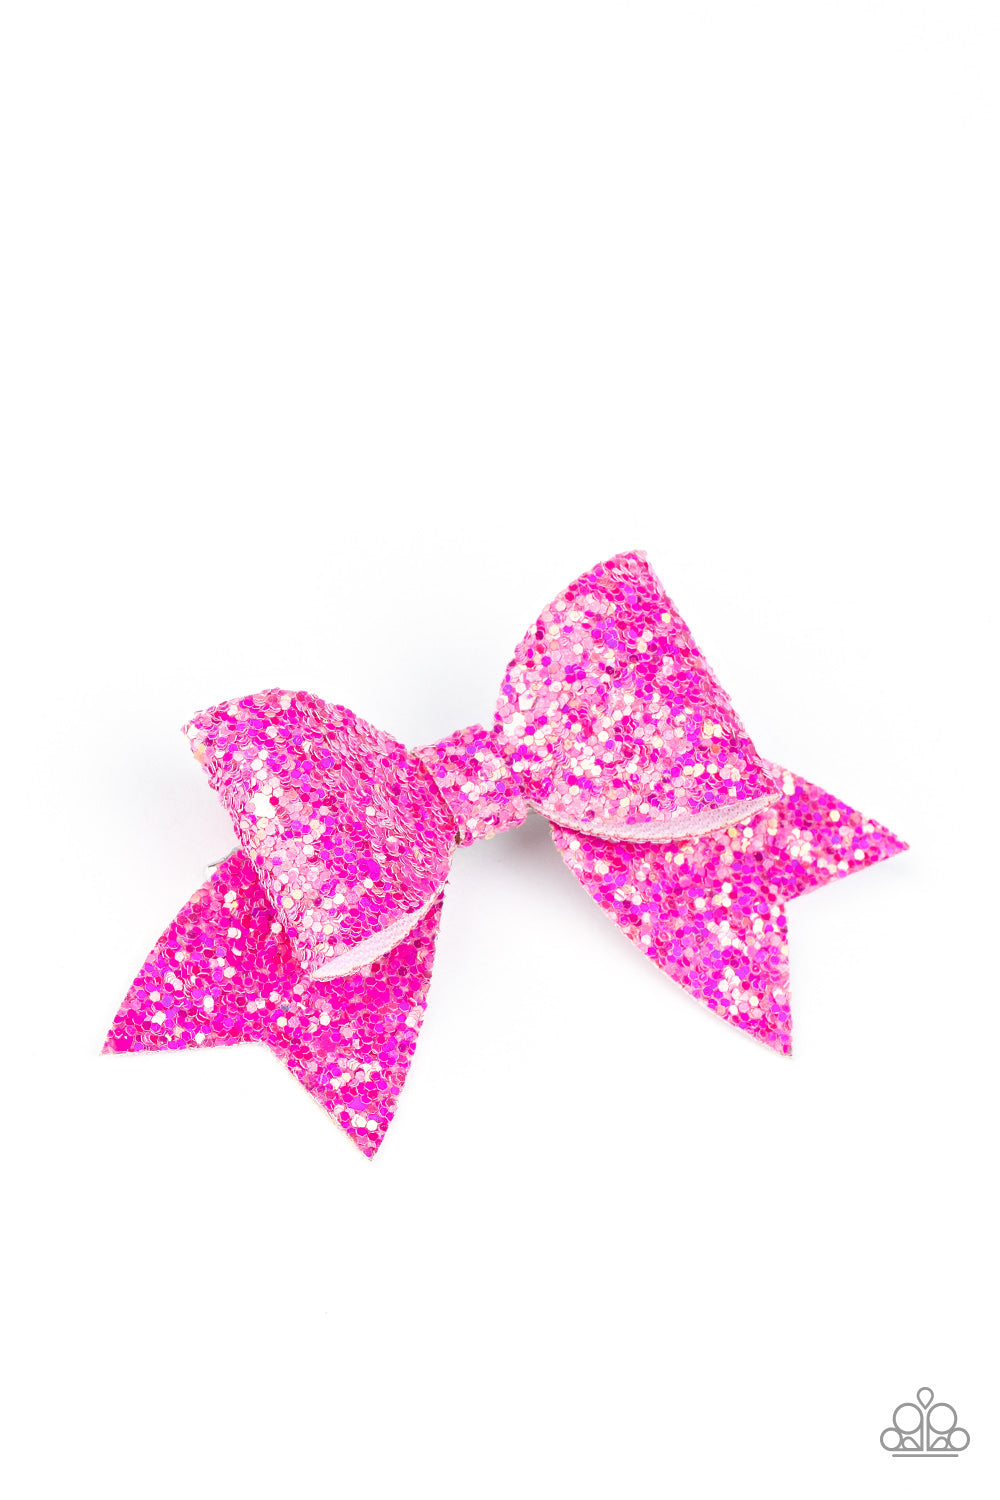 Confetti Princess - Pink